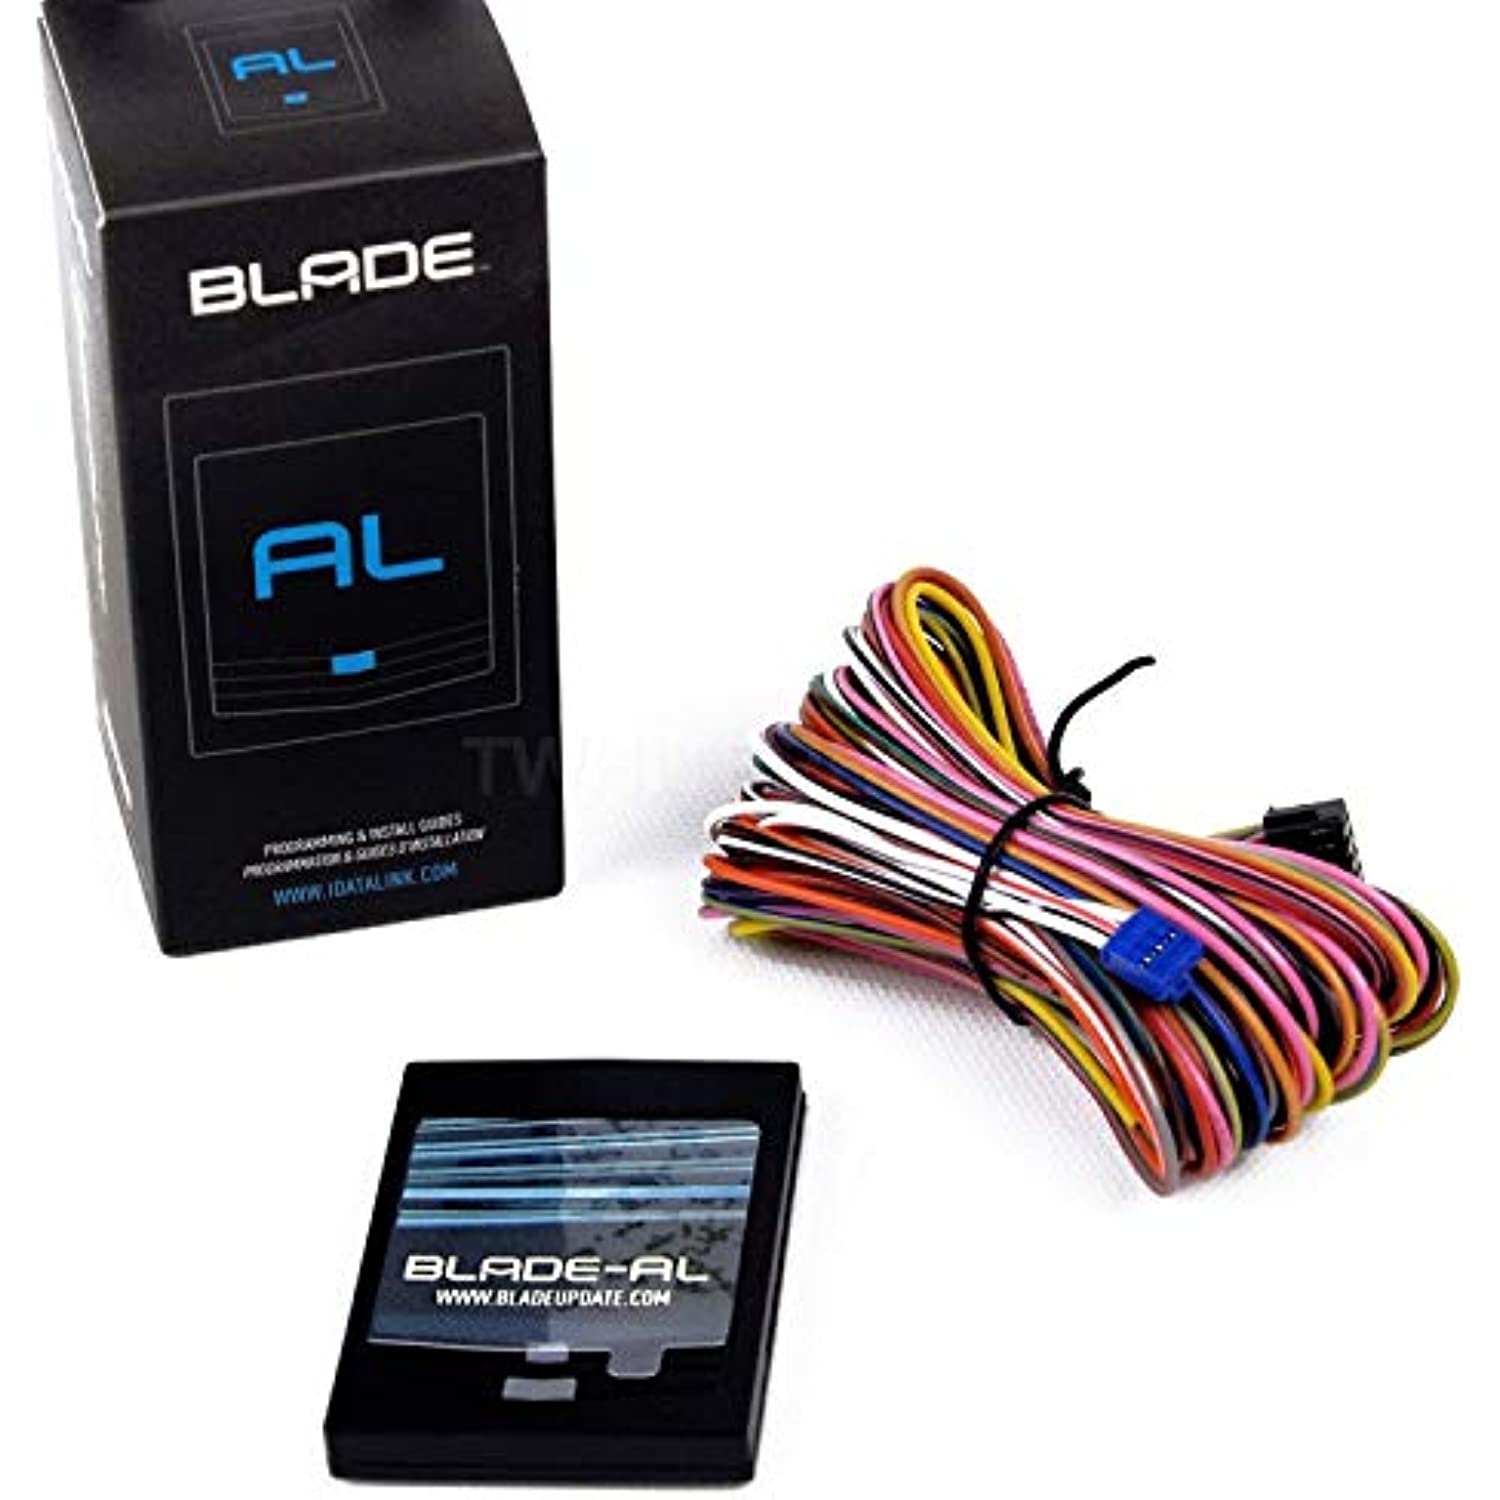 Idatalink Compustar BLADE-AL Web-programmable data immobilizer bypass and doorlock integration cartridge